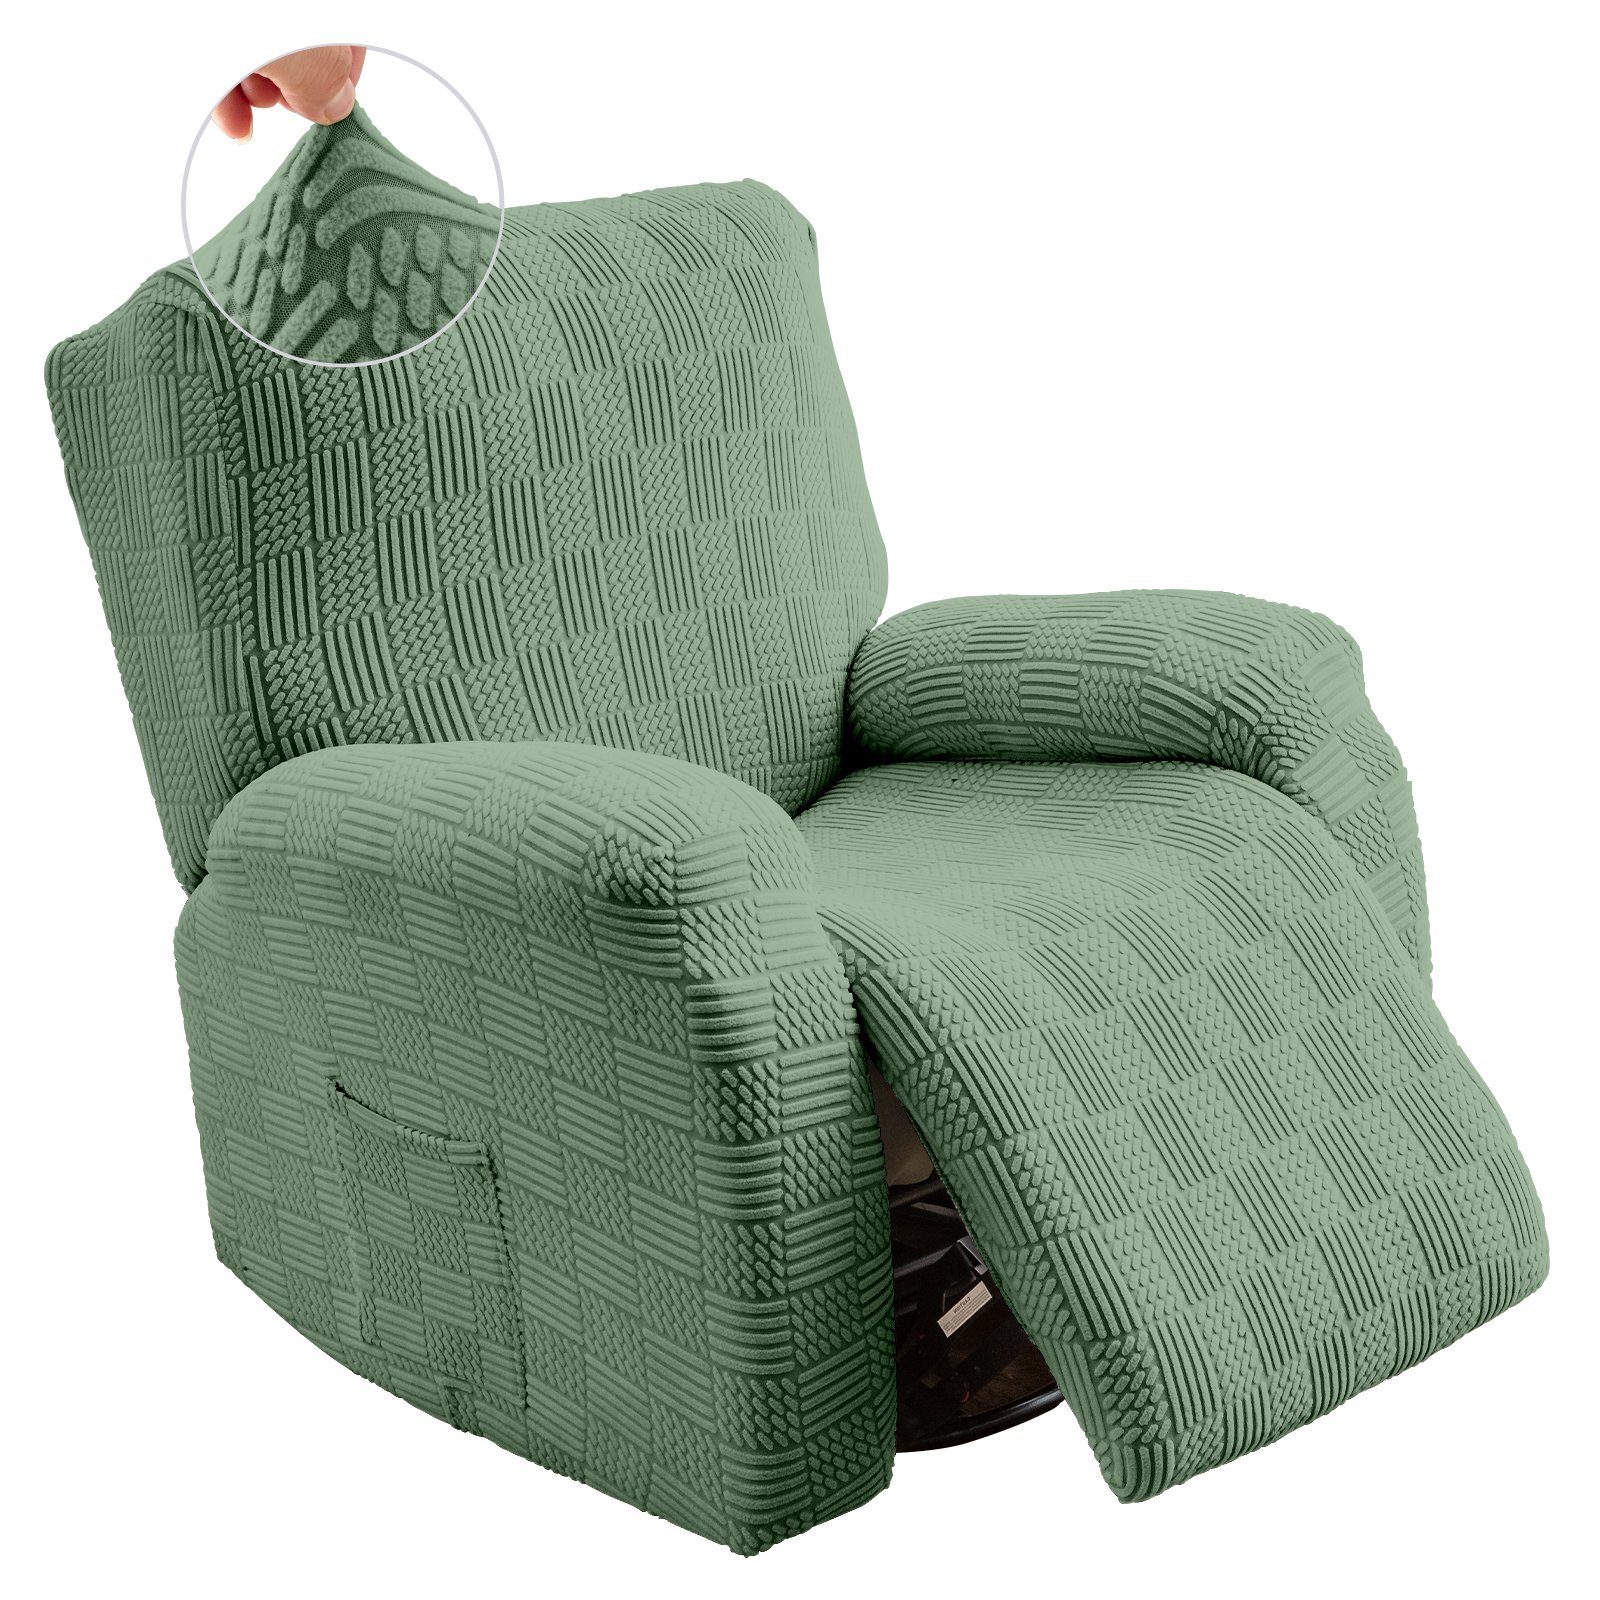 Relaxsesselhusse Fernsehsessel Liege Jacquard, Grün Teile Sunicol, Komplett, für Elastisch Bezug Relaxsessel, 4 Stretch Sesselhusse, für Sesselschoner, Sessel